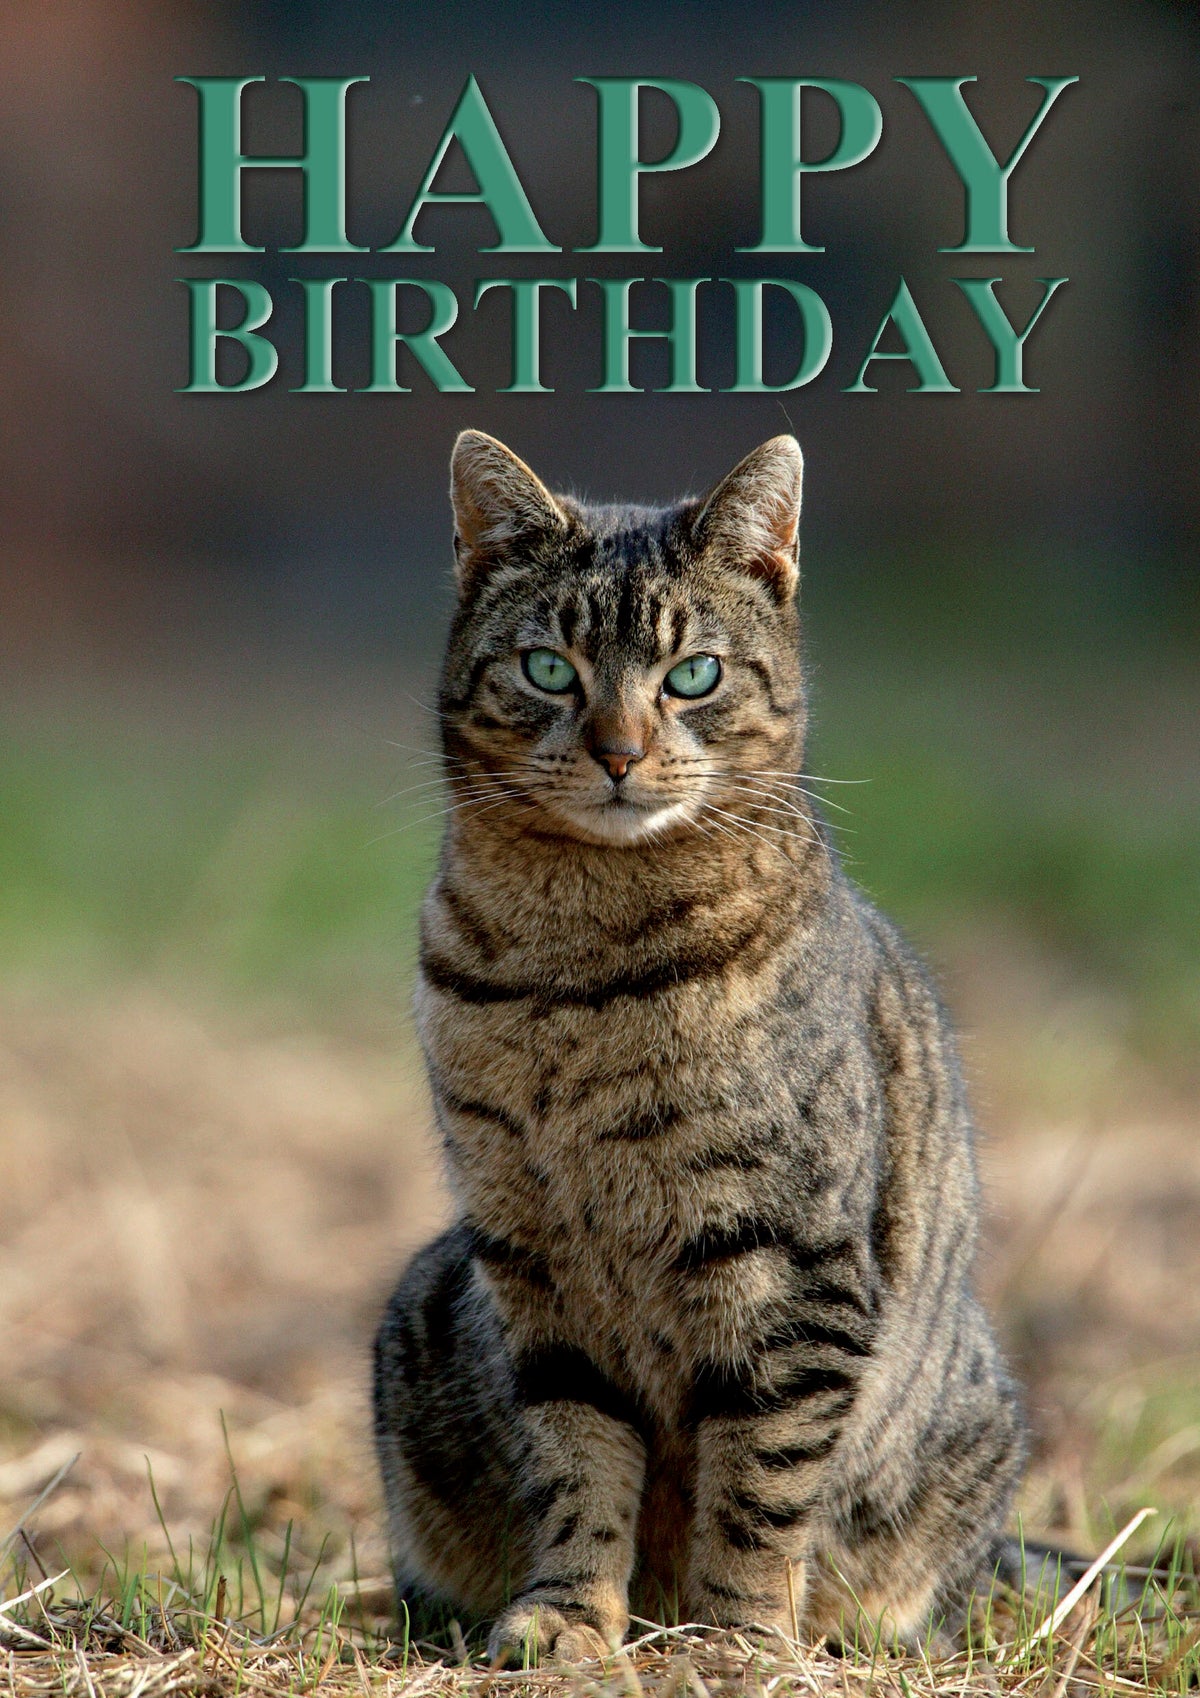 Charles Sainsbury-Plaice Happy Birthday Percy the Farm Cat Greeting Card